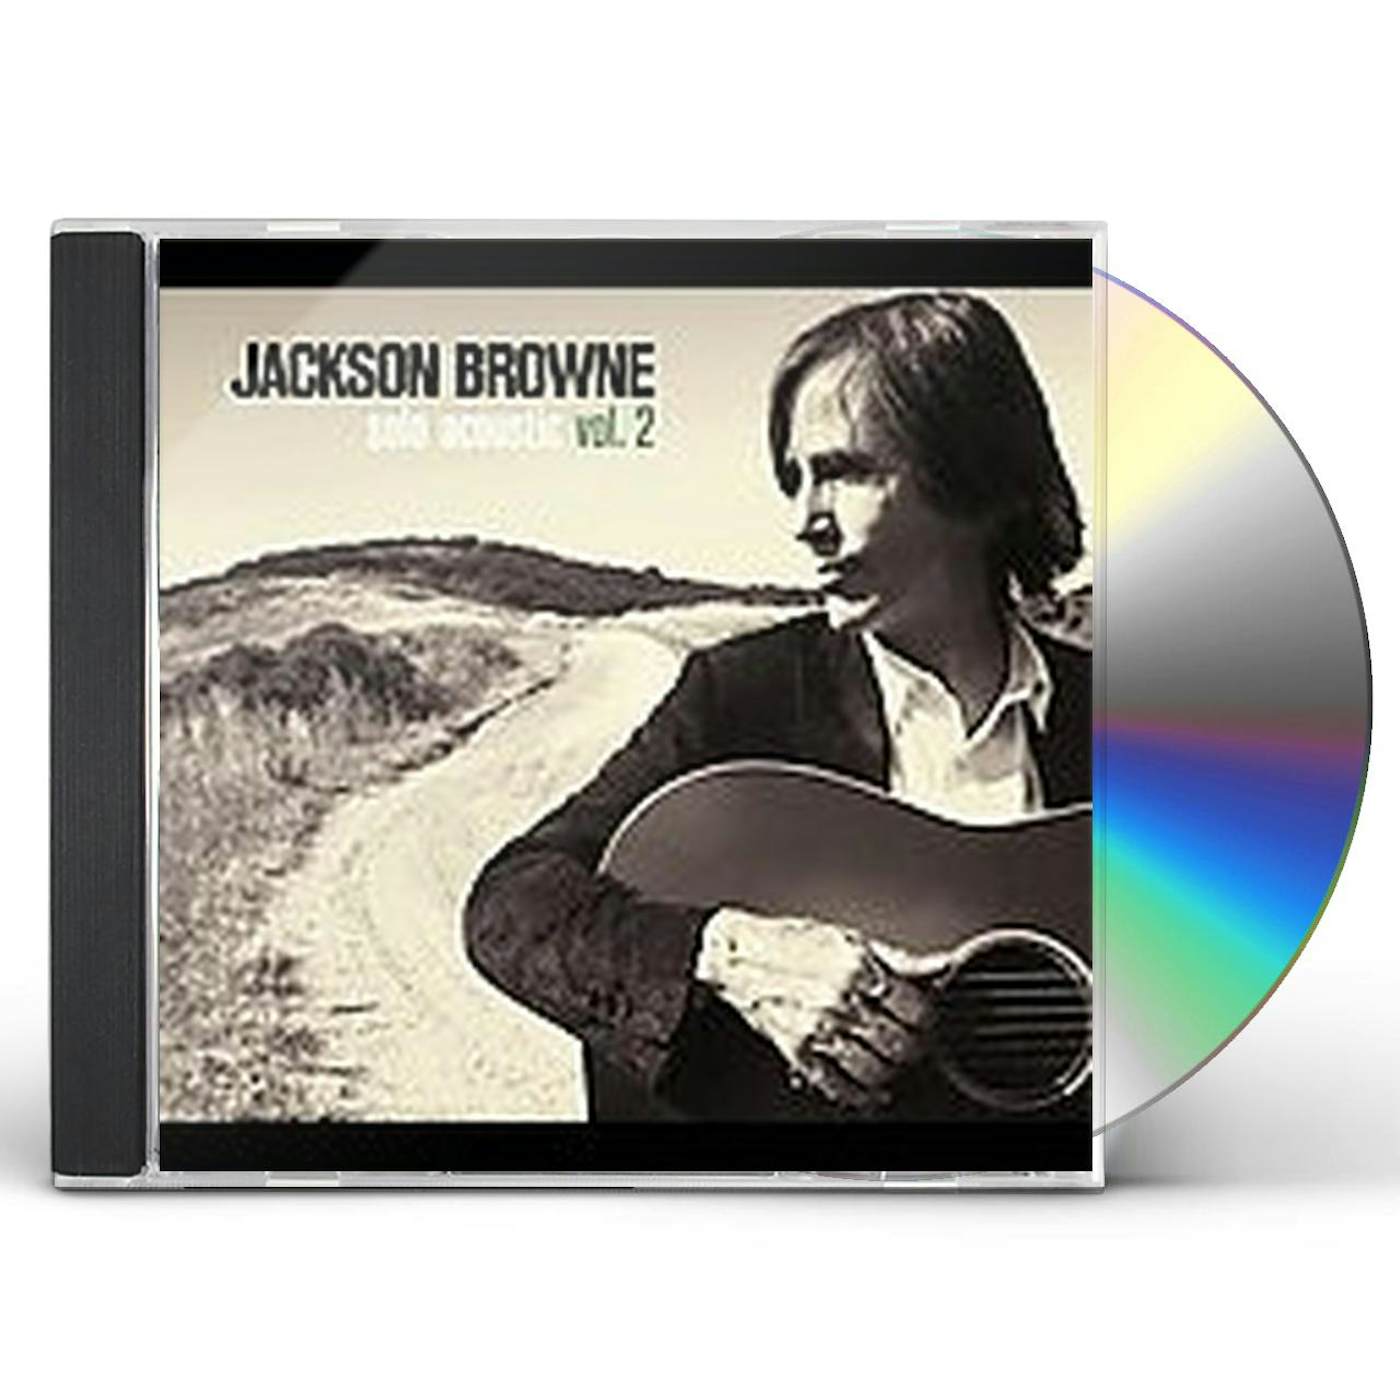 Jackson Browne SOLO ACOUSTIC 2 CD